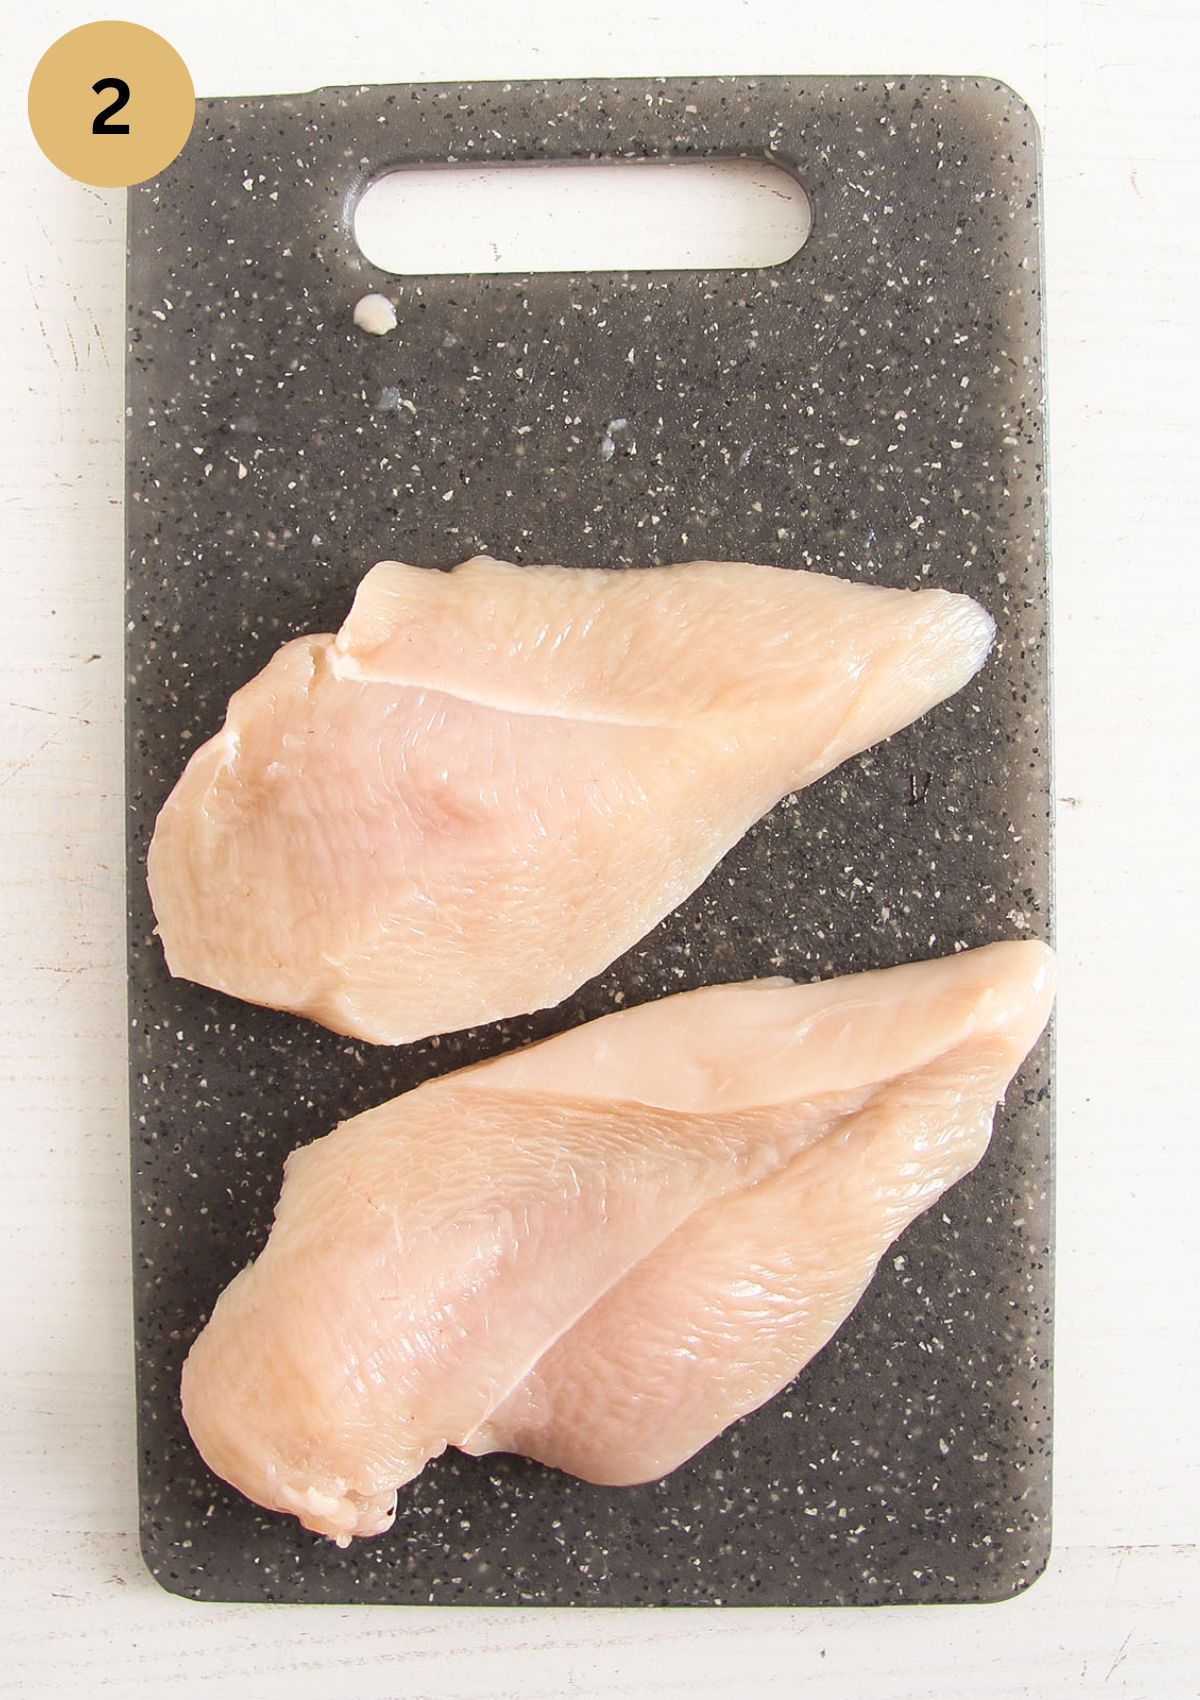 raw chicken breast sliced on a gray cutting board.